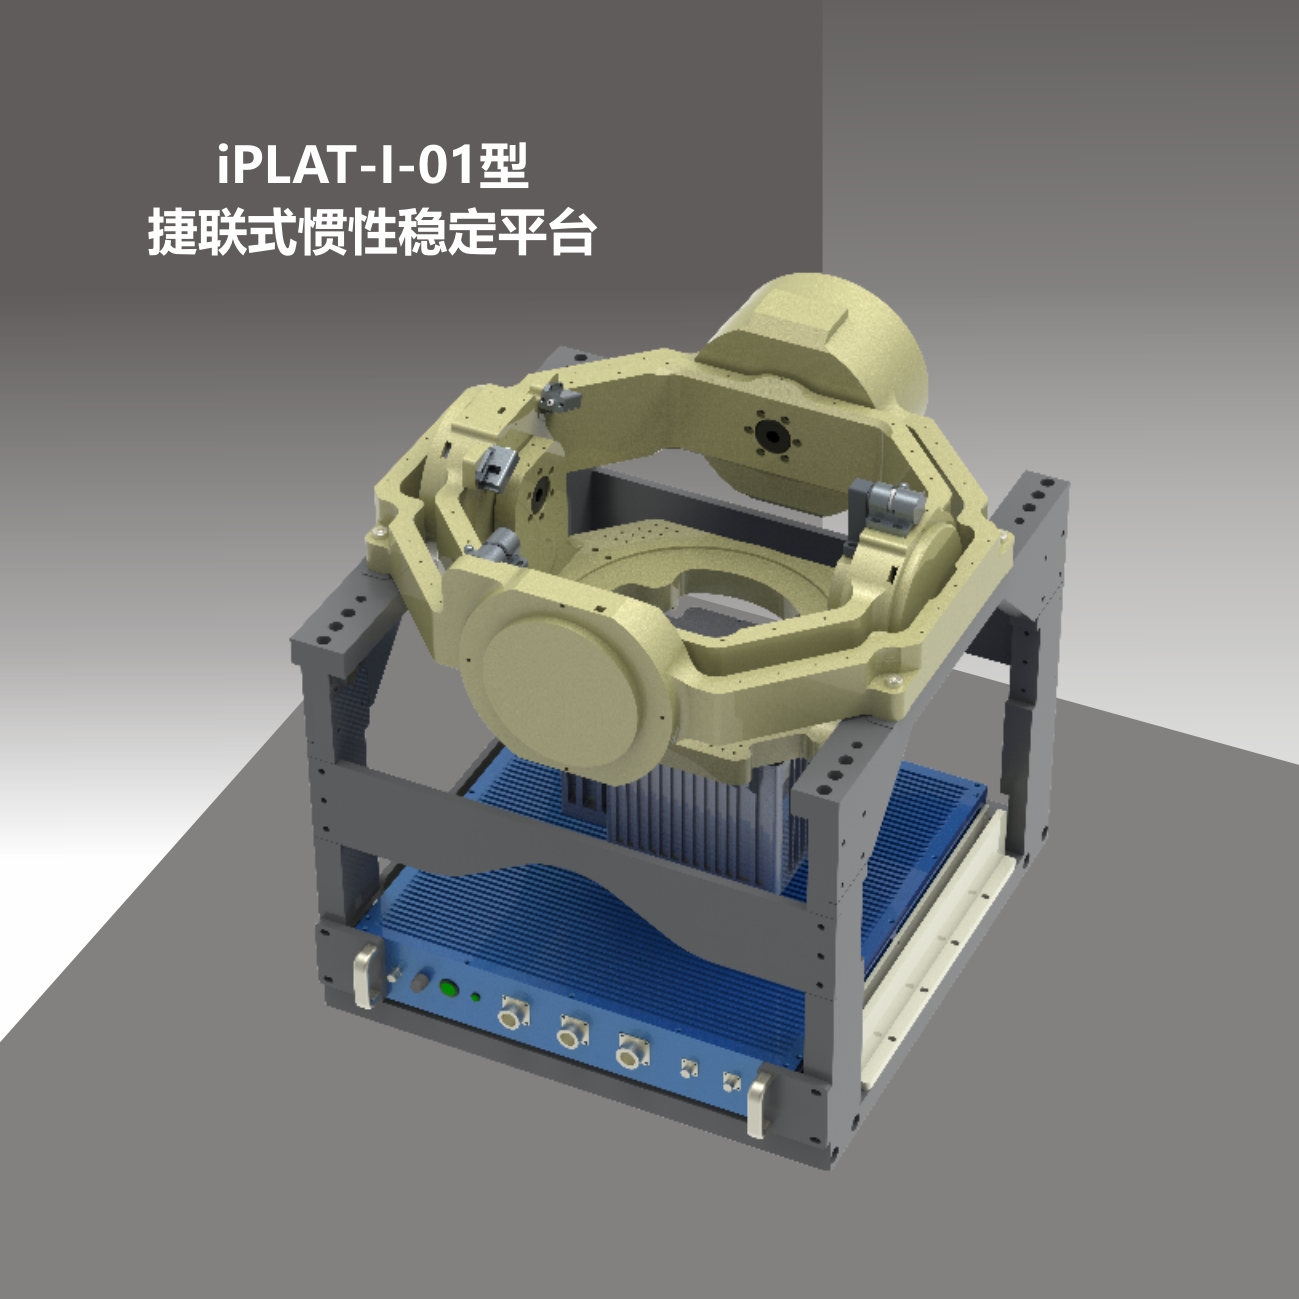 iPLAT-I-01型捷联式惯性稳定平台